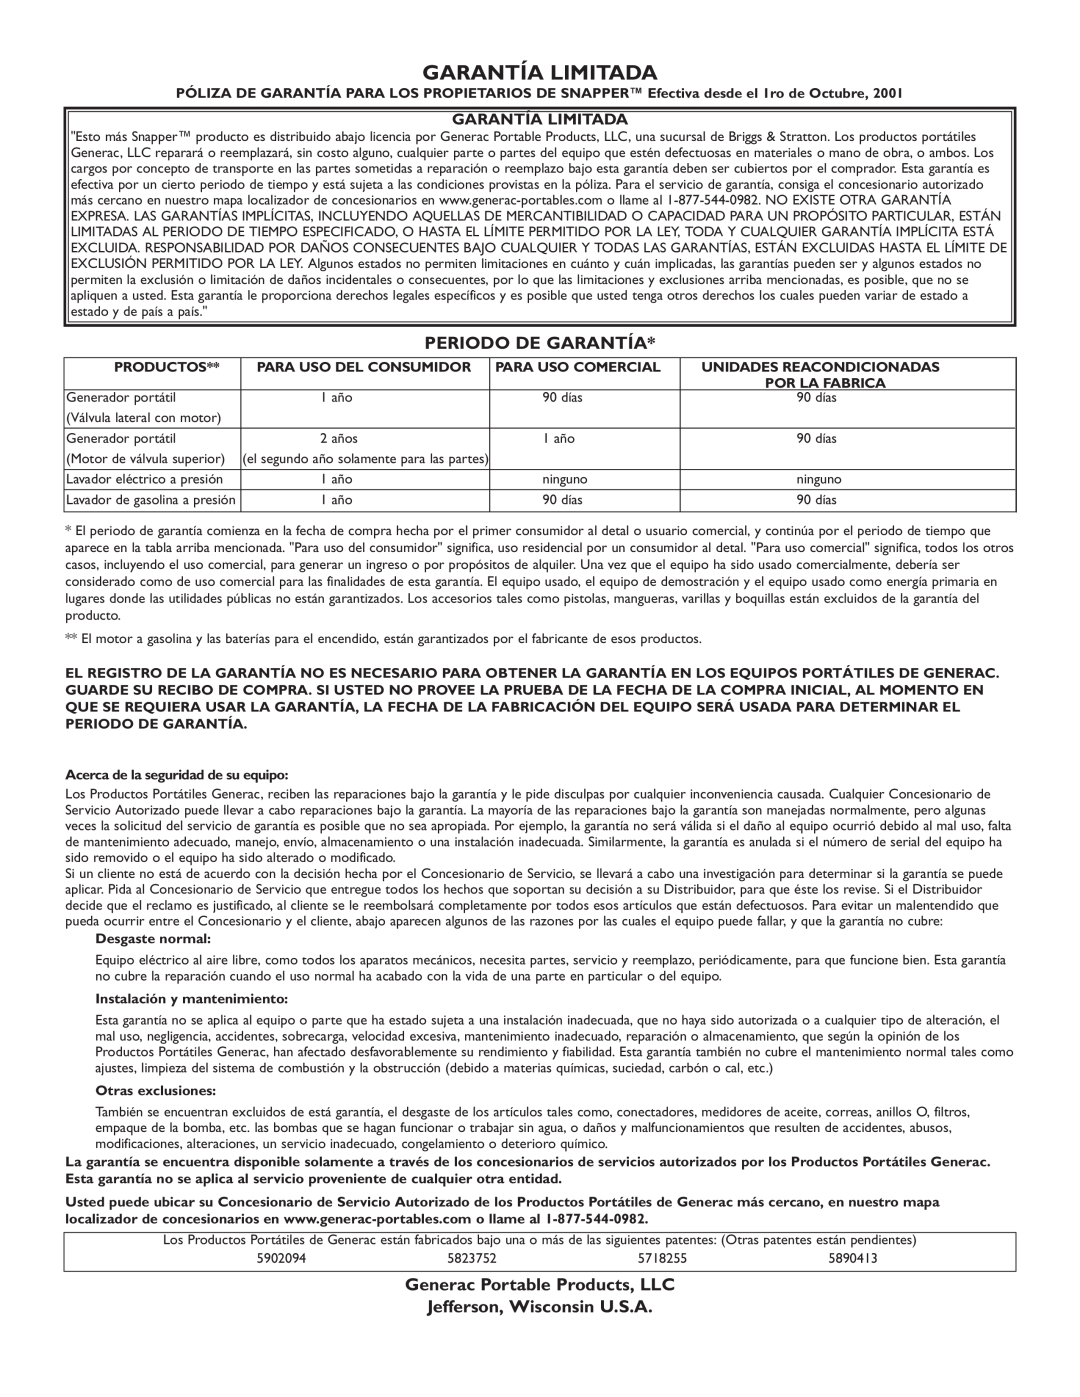 Snapper 1666-0 Garantía Limitada, Periodo De Garantía, Generac Portable Products, LLC Jefferson, Wisconsin U.S.A 